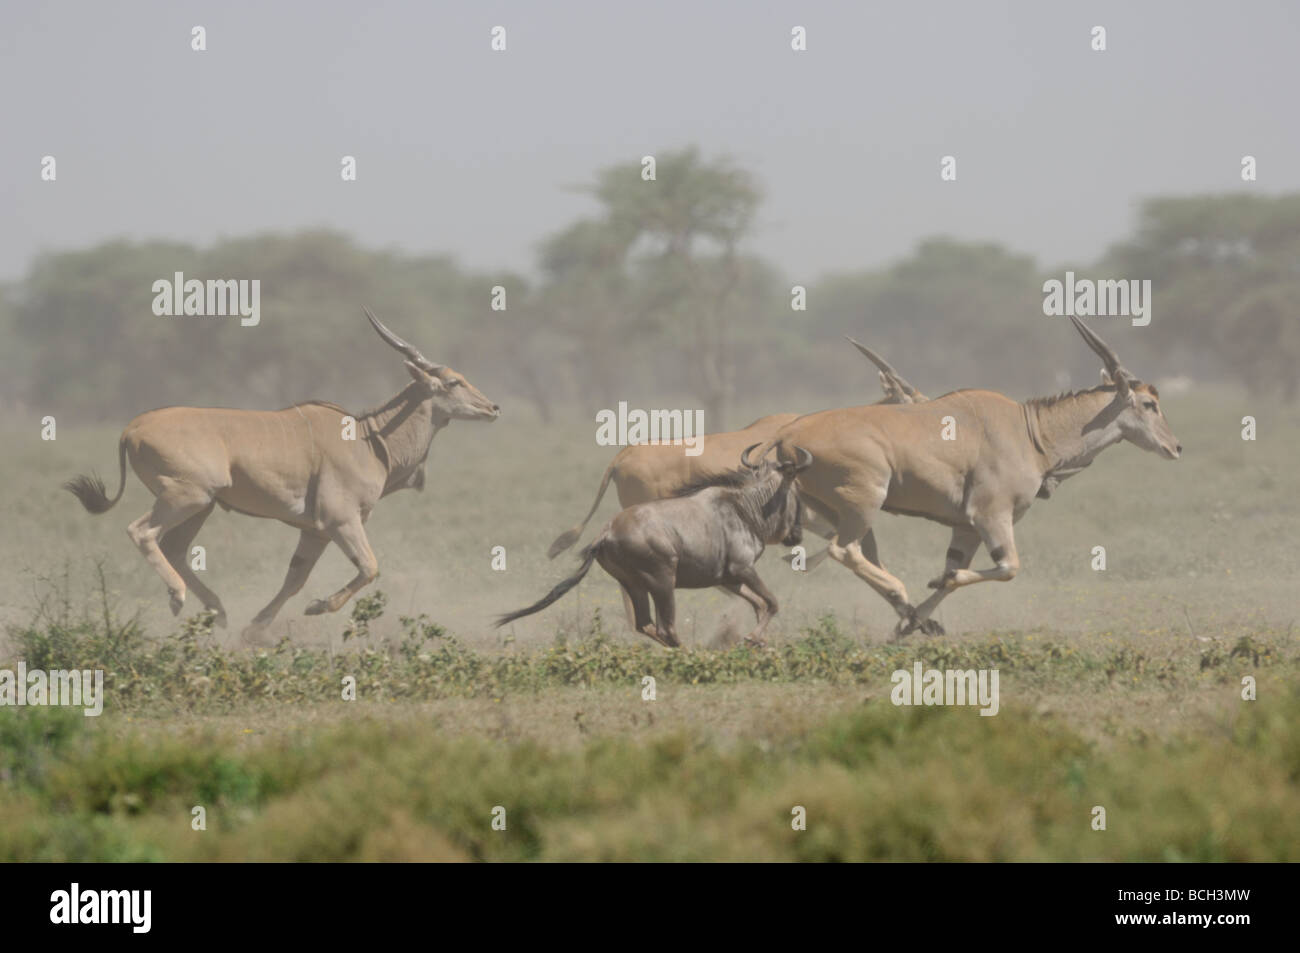 Stock photo of an eland and wildebeest stampede, Ndutu, Tanzania, February 2009. Stock Photo